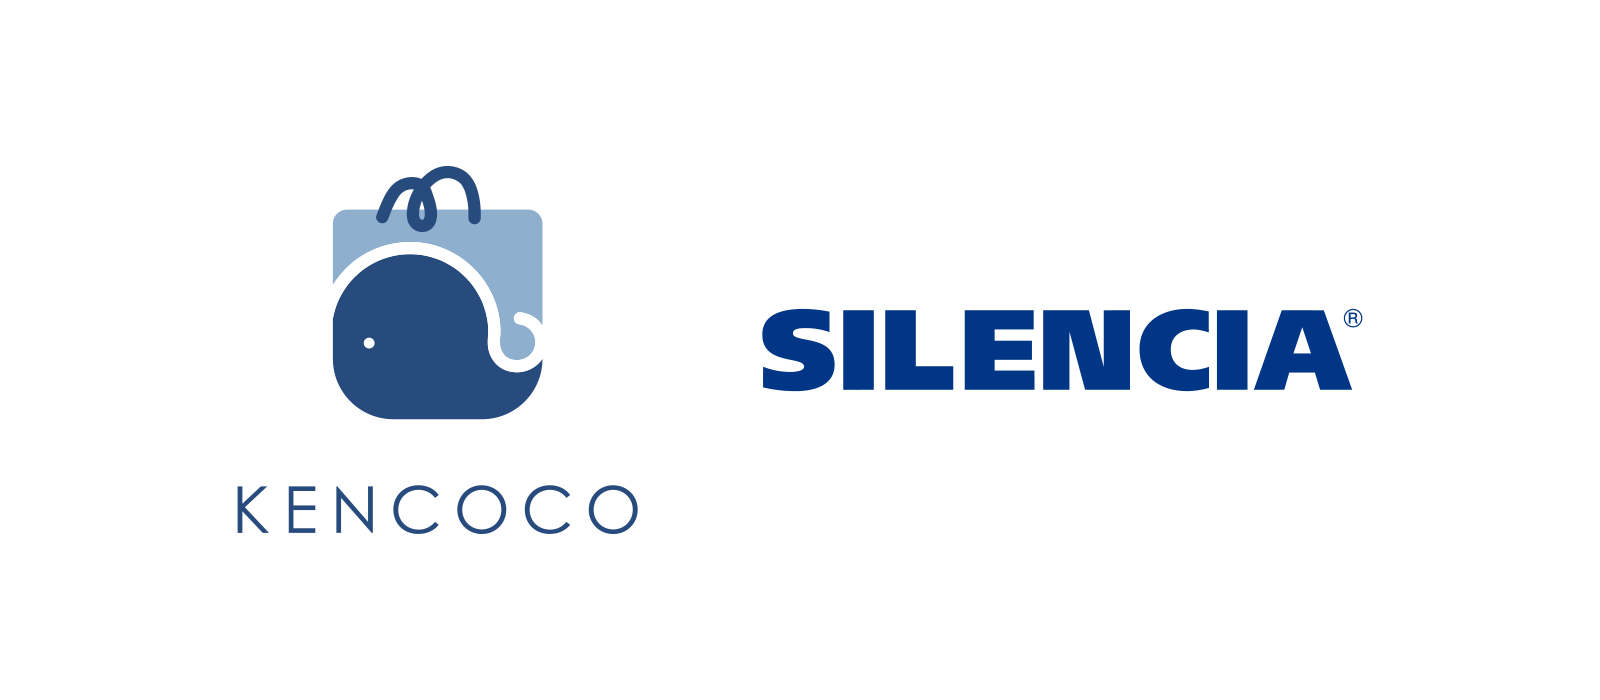 KENCOCO ✕ SILENCIA®